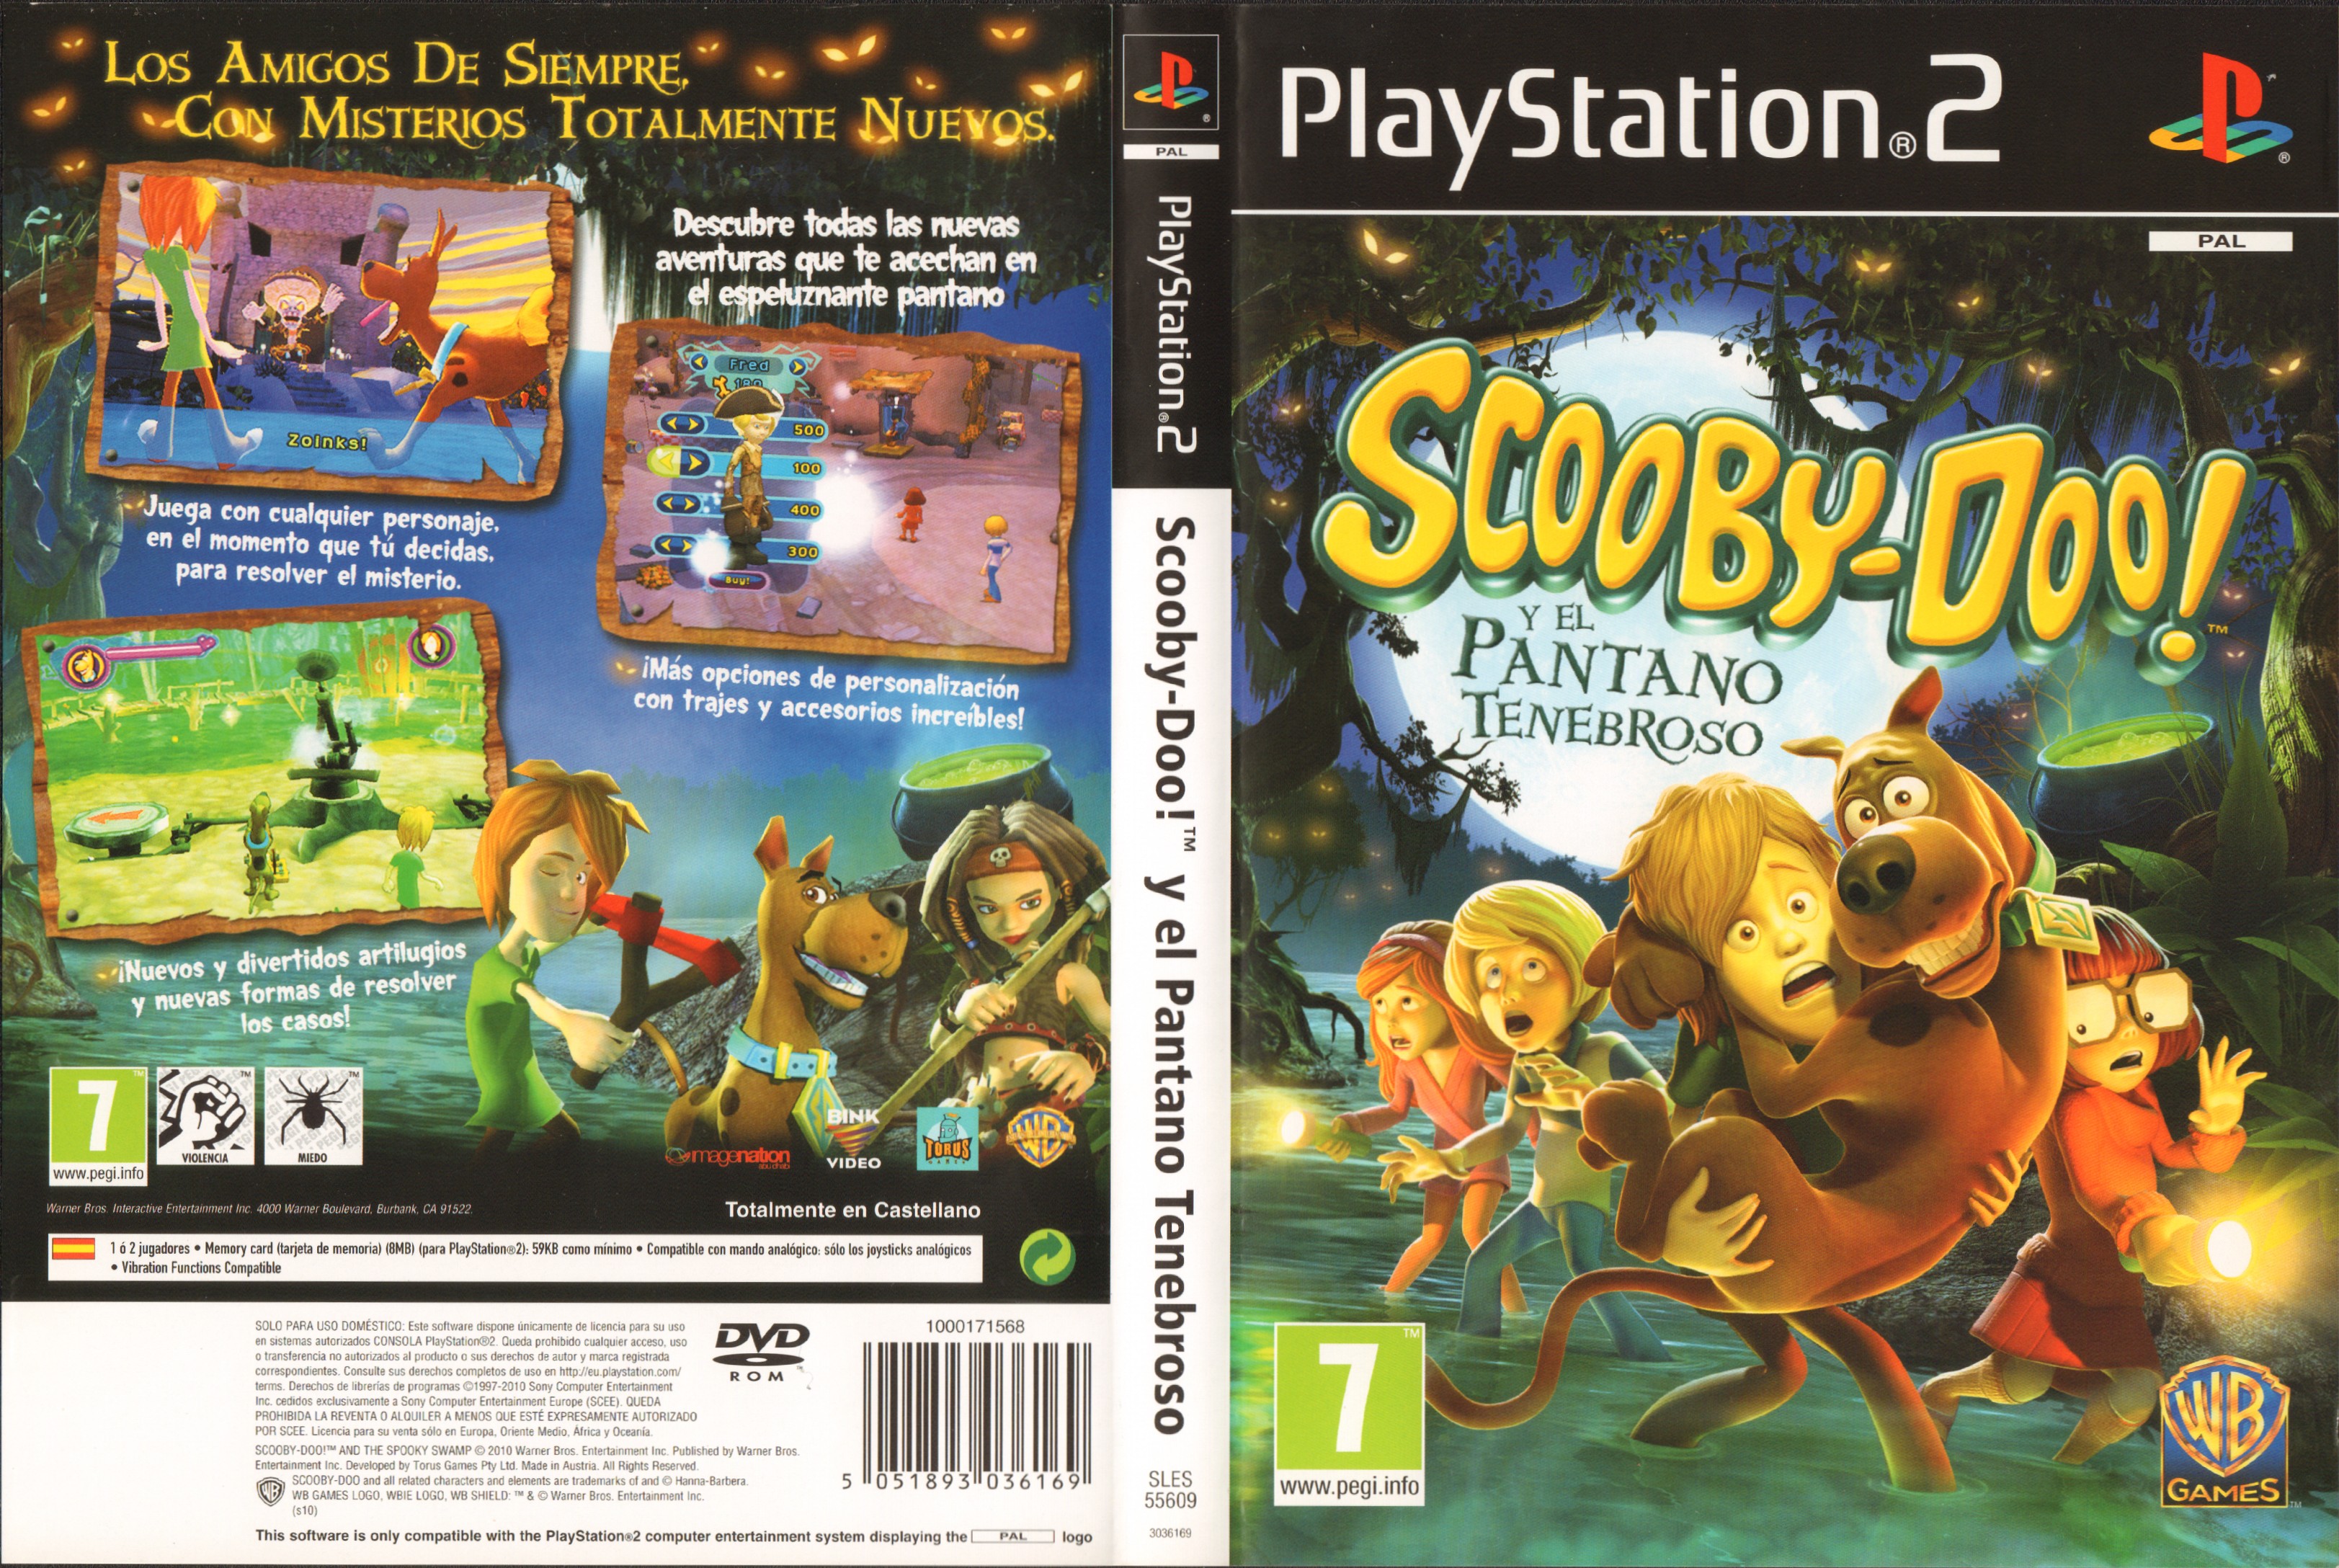 scooby doo spooky swamp pc download